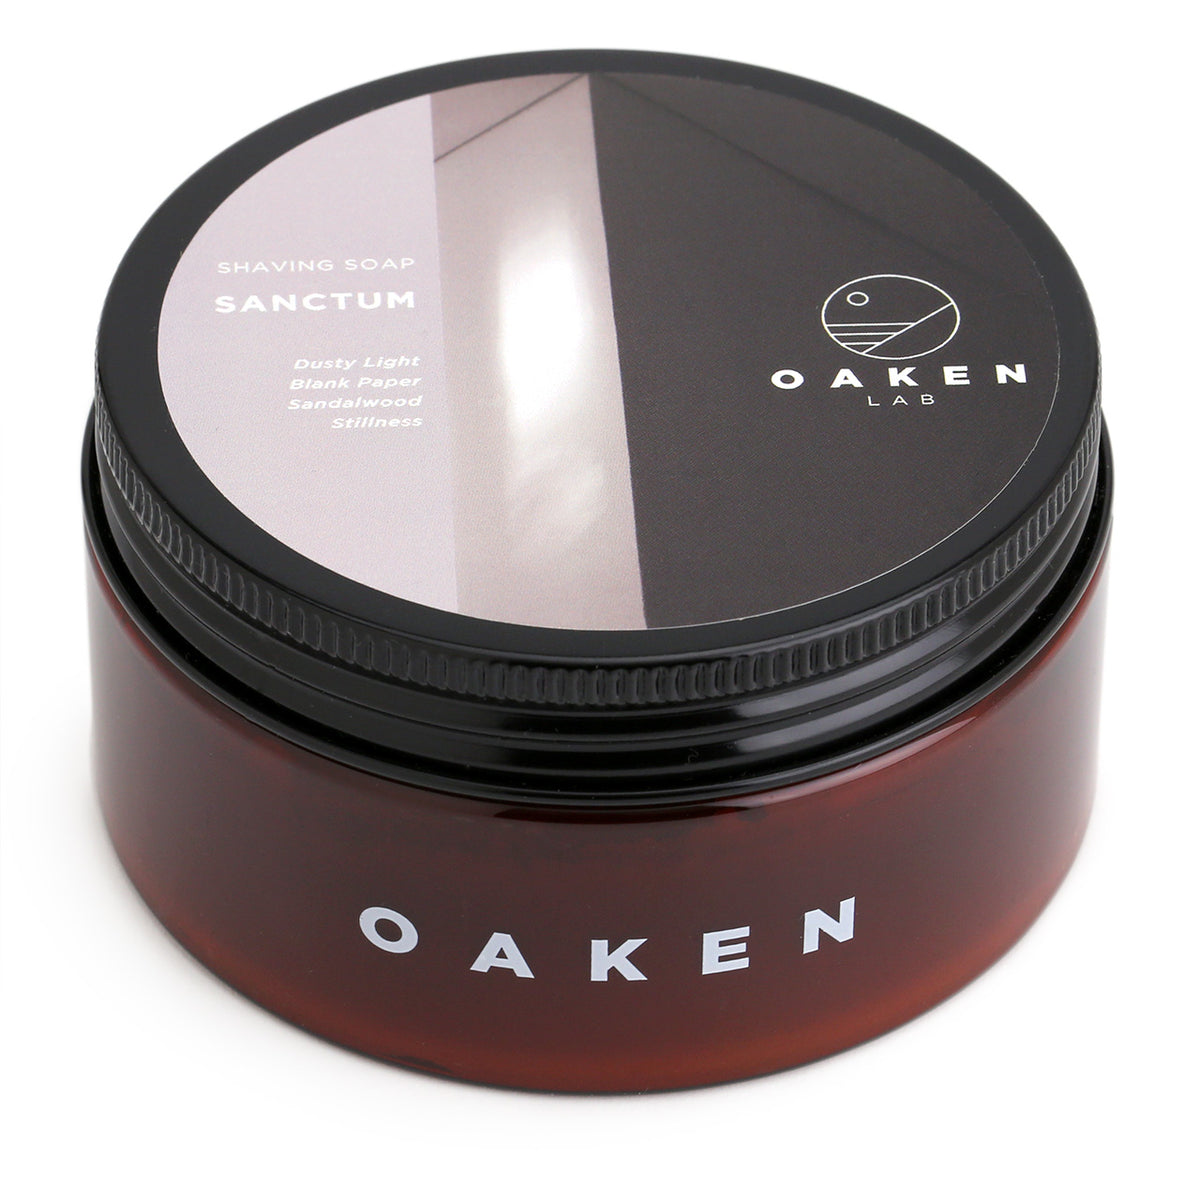 Oaken Lab artisan shaving soap, top and side view - Sanctum